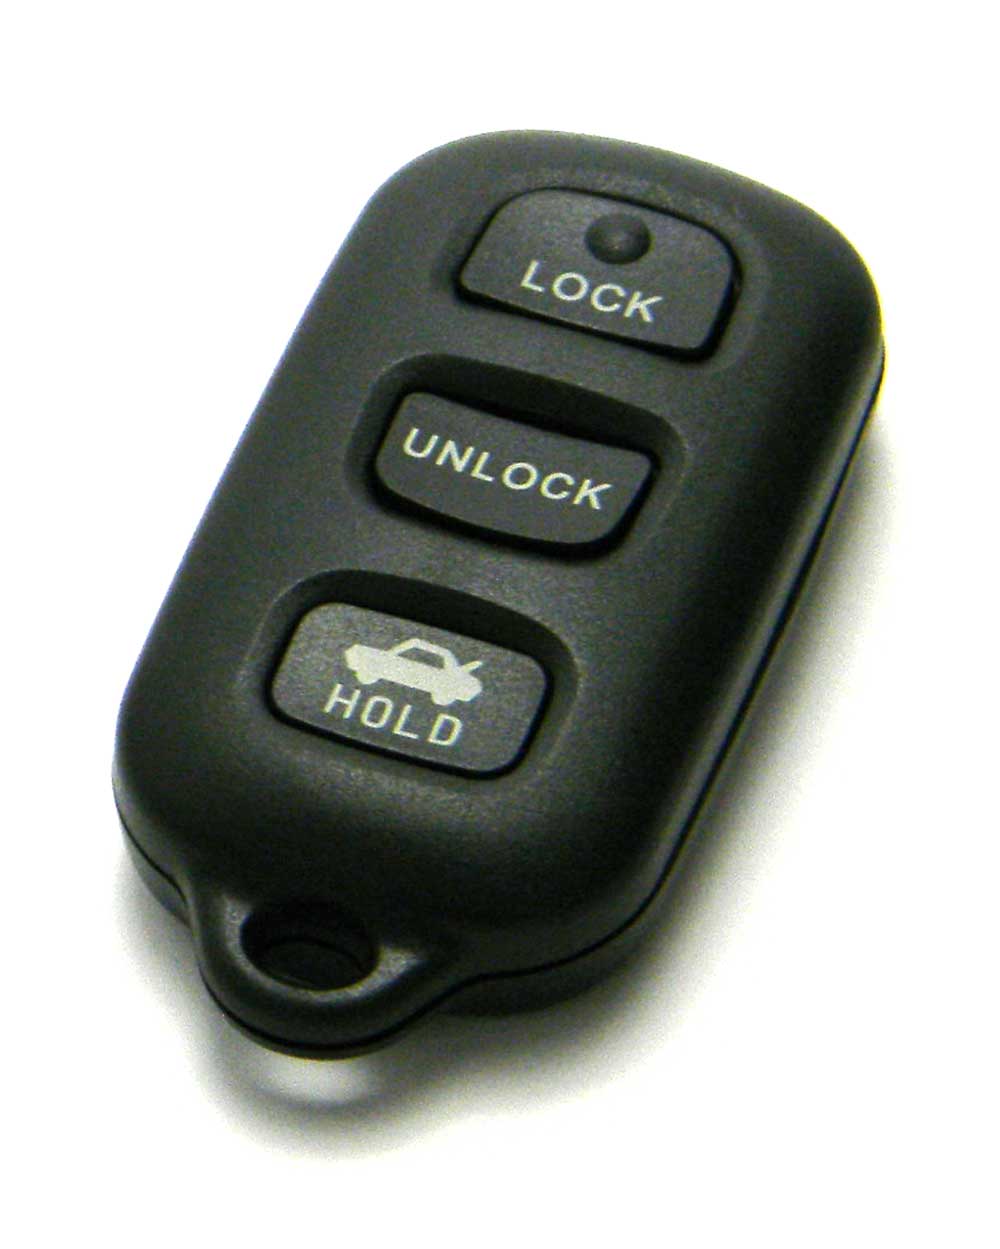 2009 toyota camry key fob battery